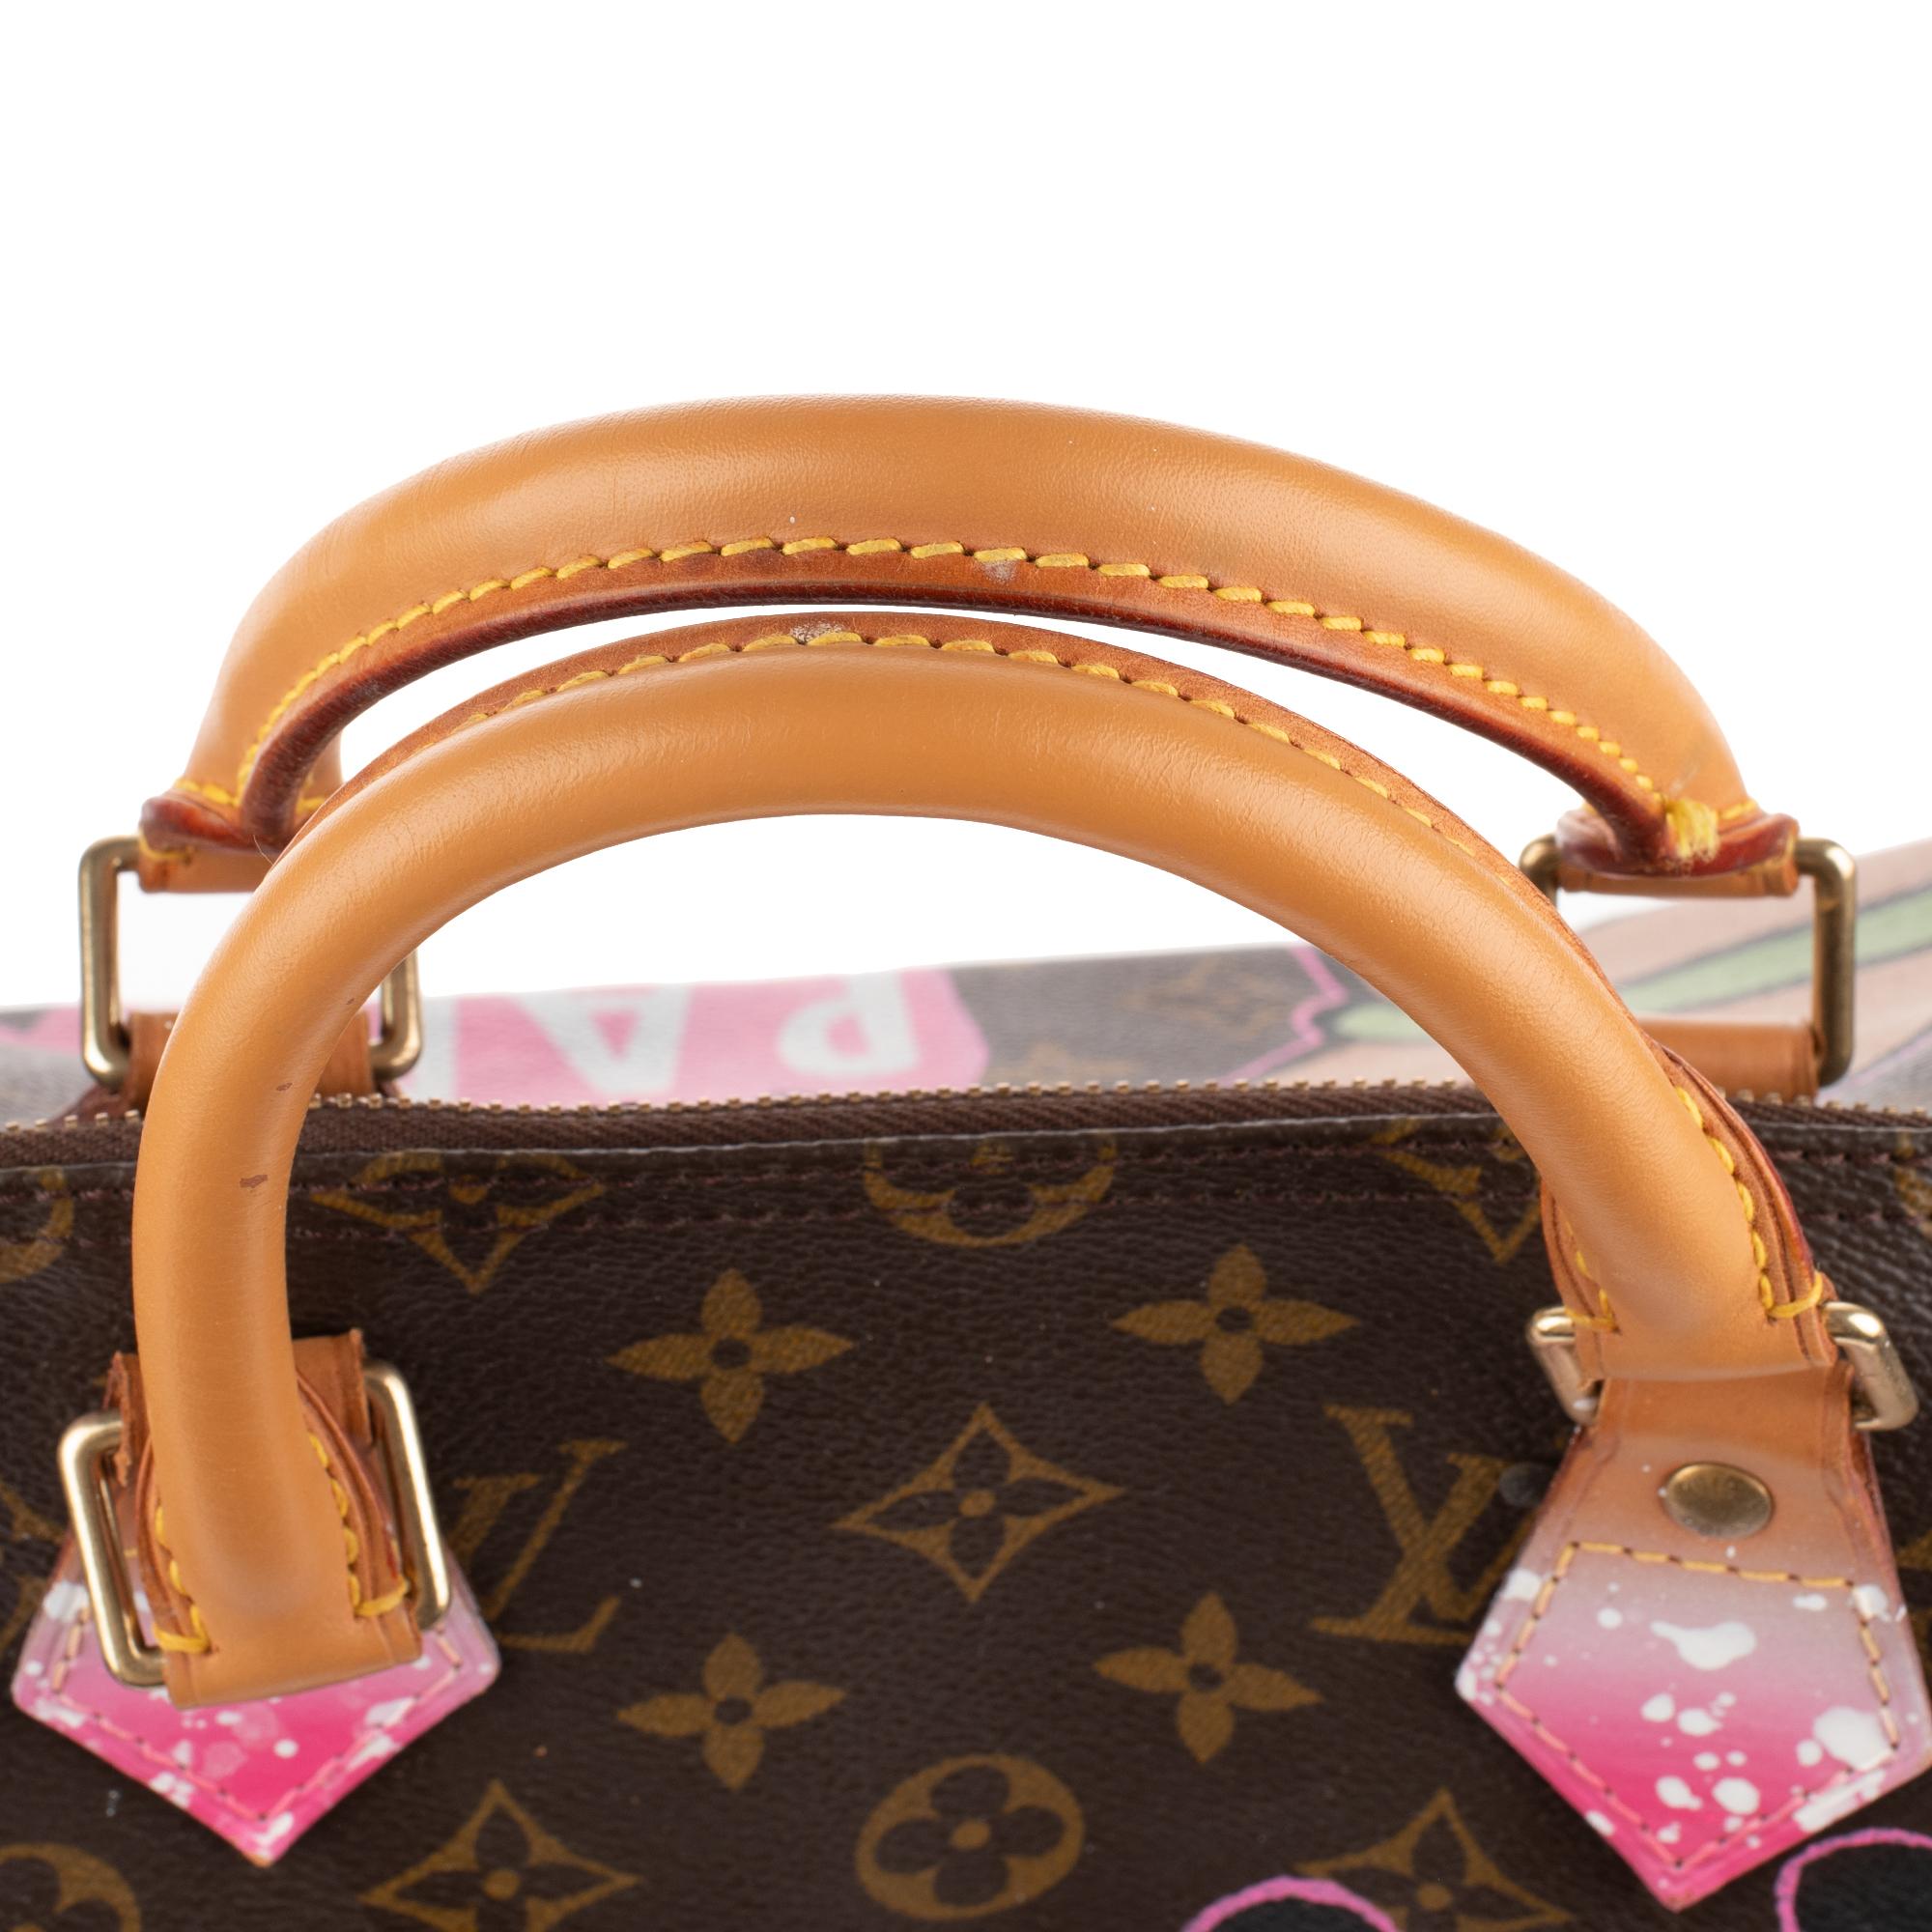 Women's or Men's Handbag Louis Vuitton Speedy 35 Monogram customized 